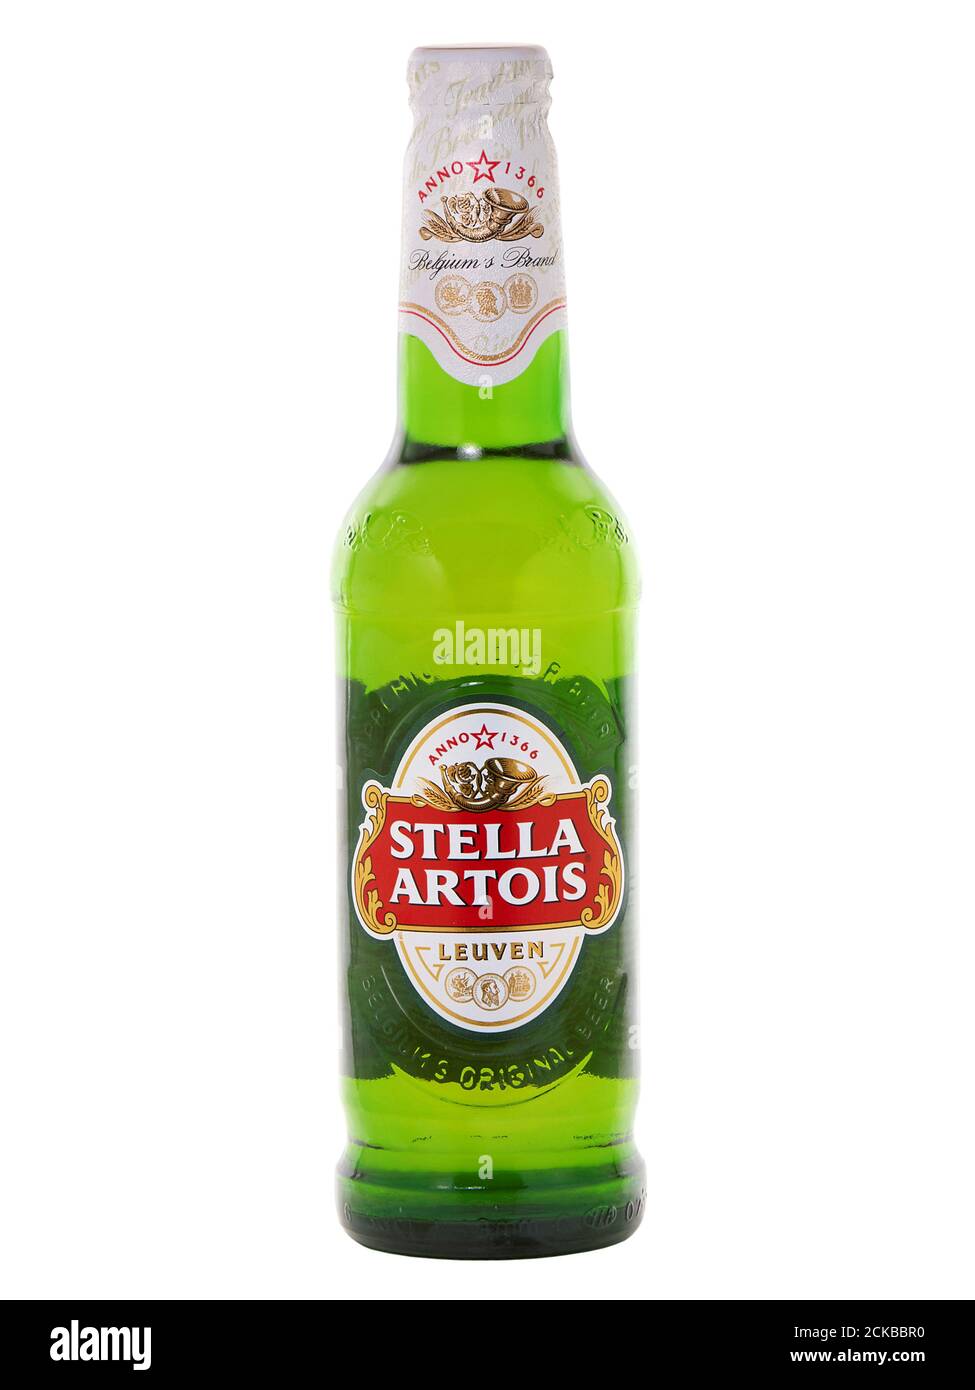 https://c8.alamy.com/comp/2CKBBR0/bucharest-romania-january-16-2015-stella-artois-glass-bottle-beer-isolated-on-white-2CKBBR0.jpg